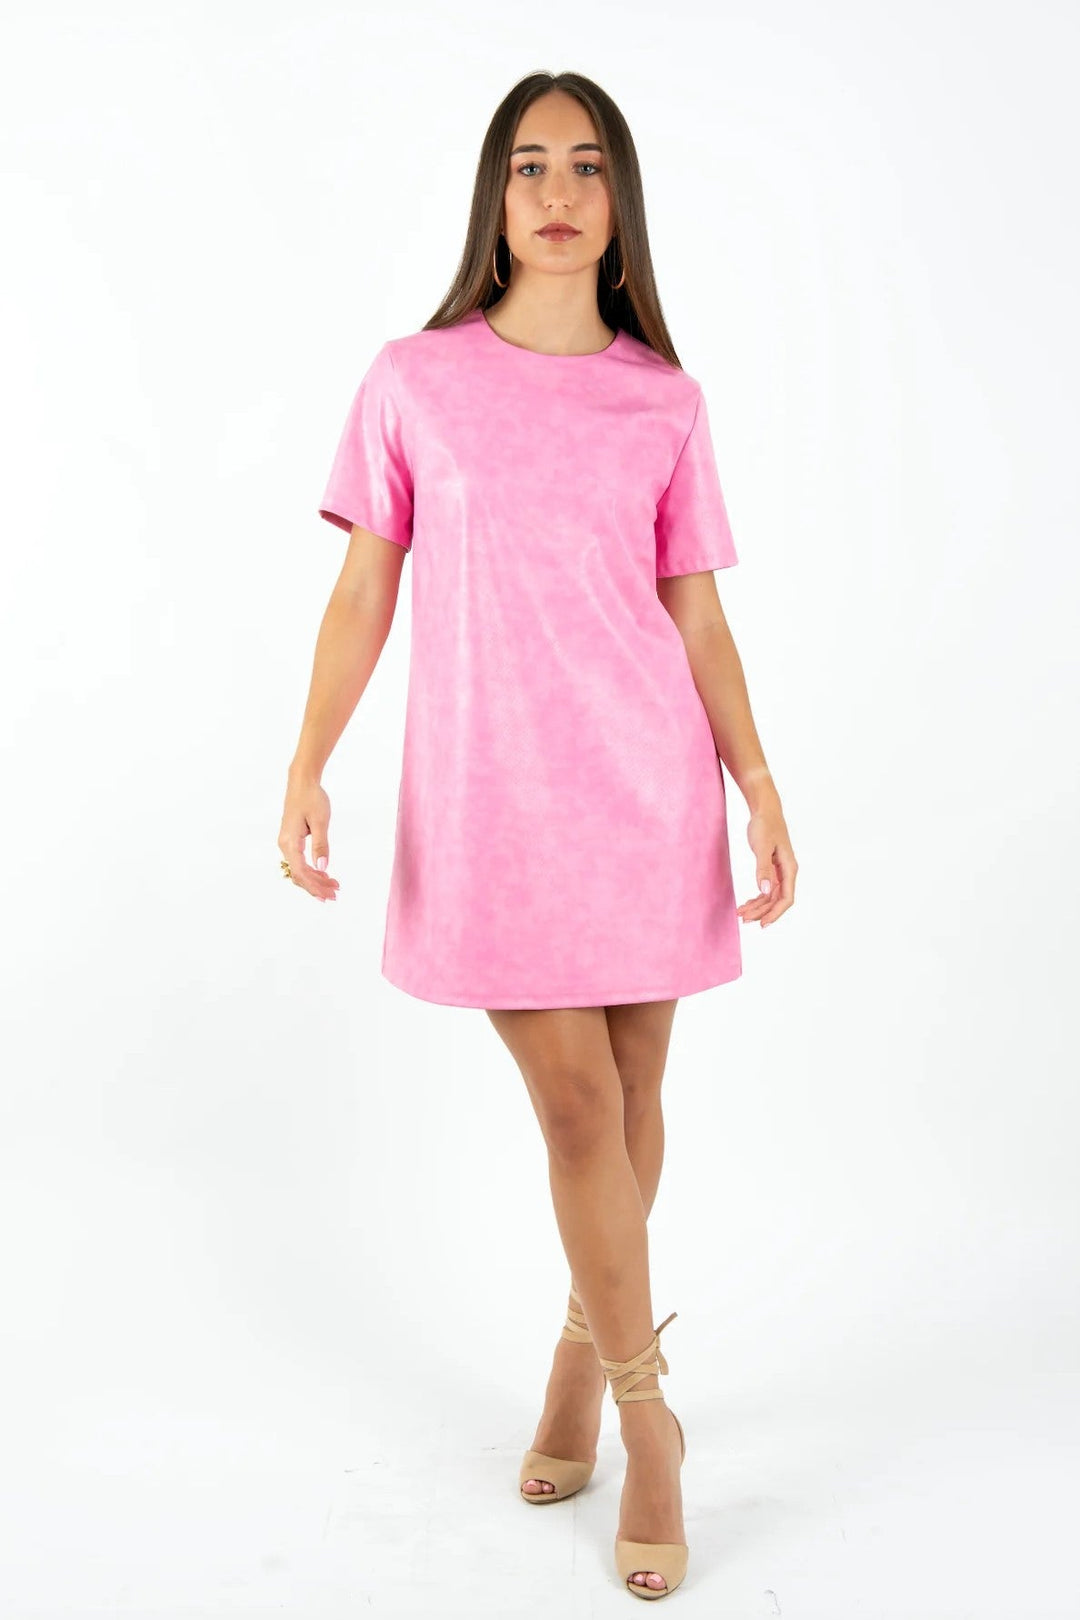 Kiki Dress - Lush Lemon - Women's Clothing - Sincerely Ours - 13183